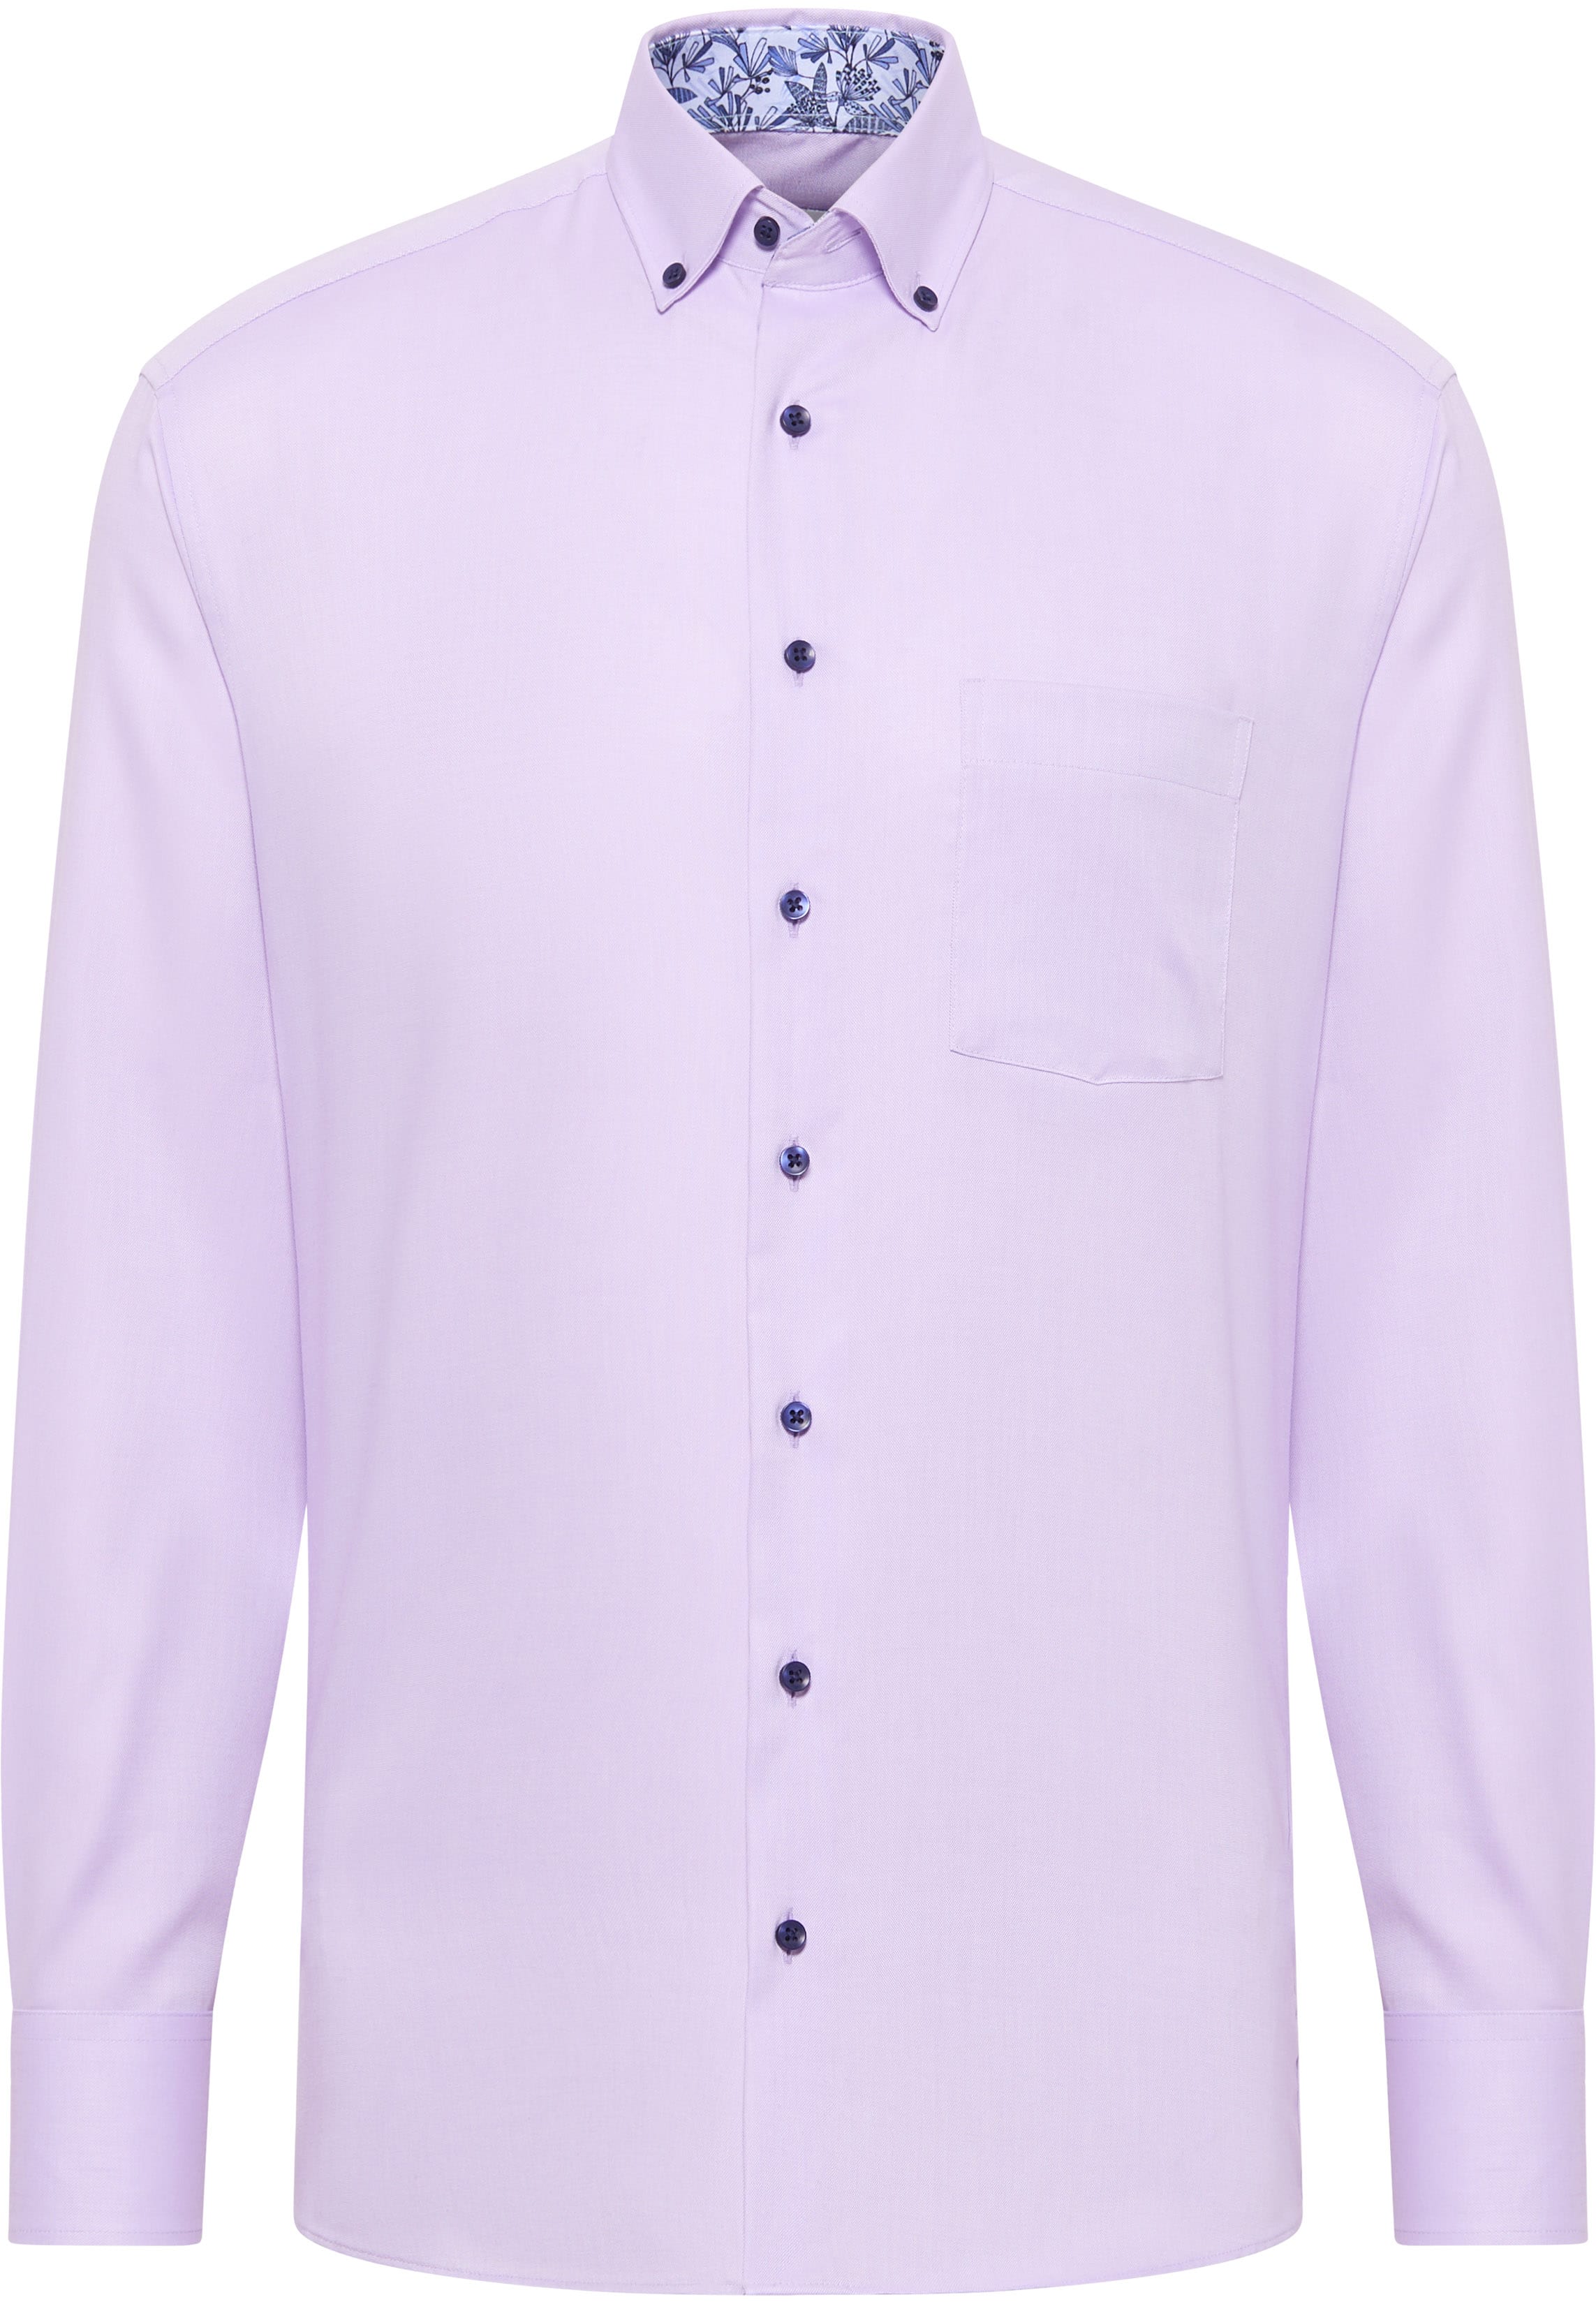 MODERN FIT Shirt in lavender plain